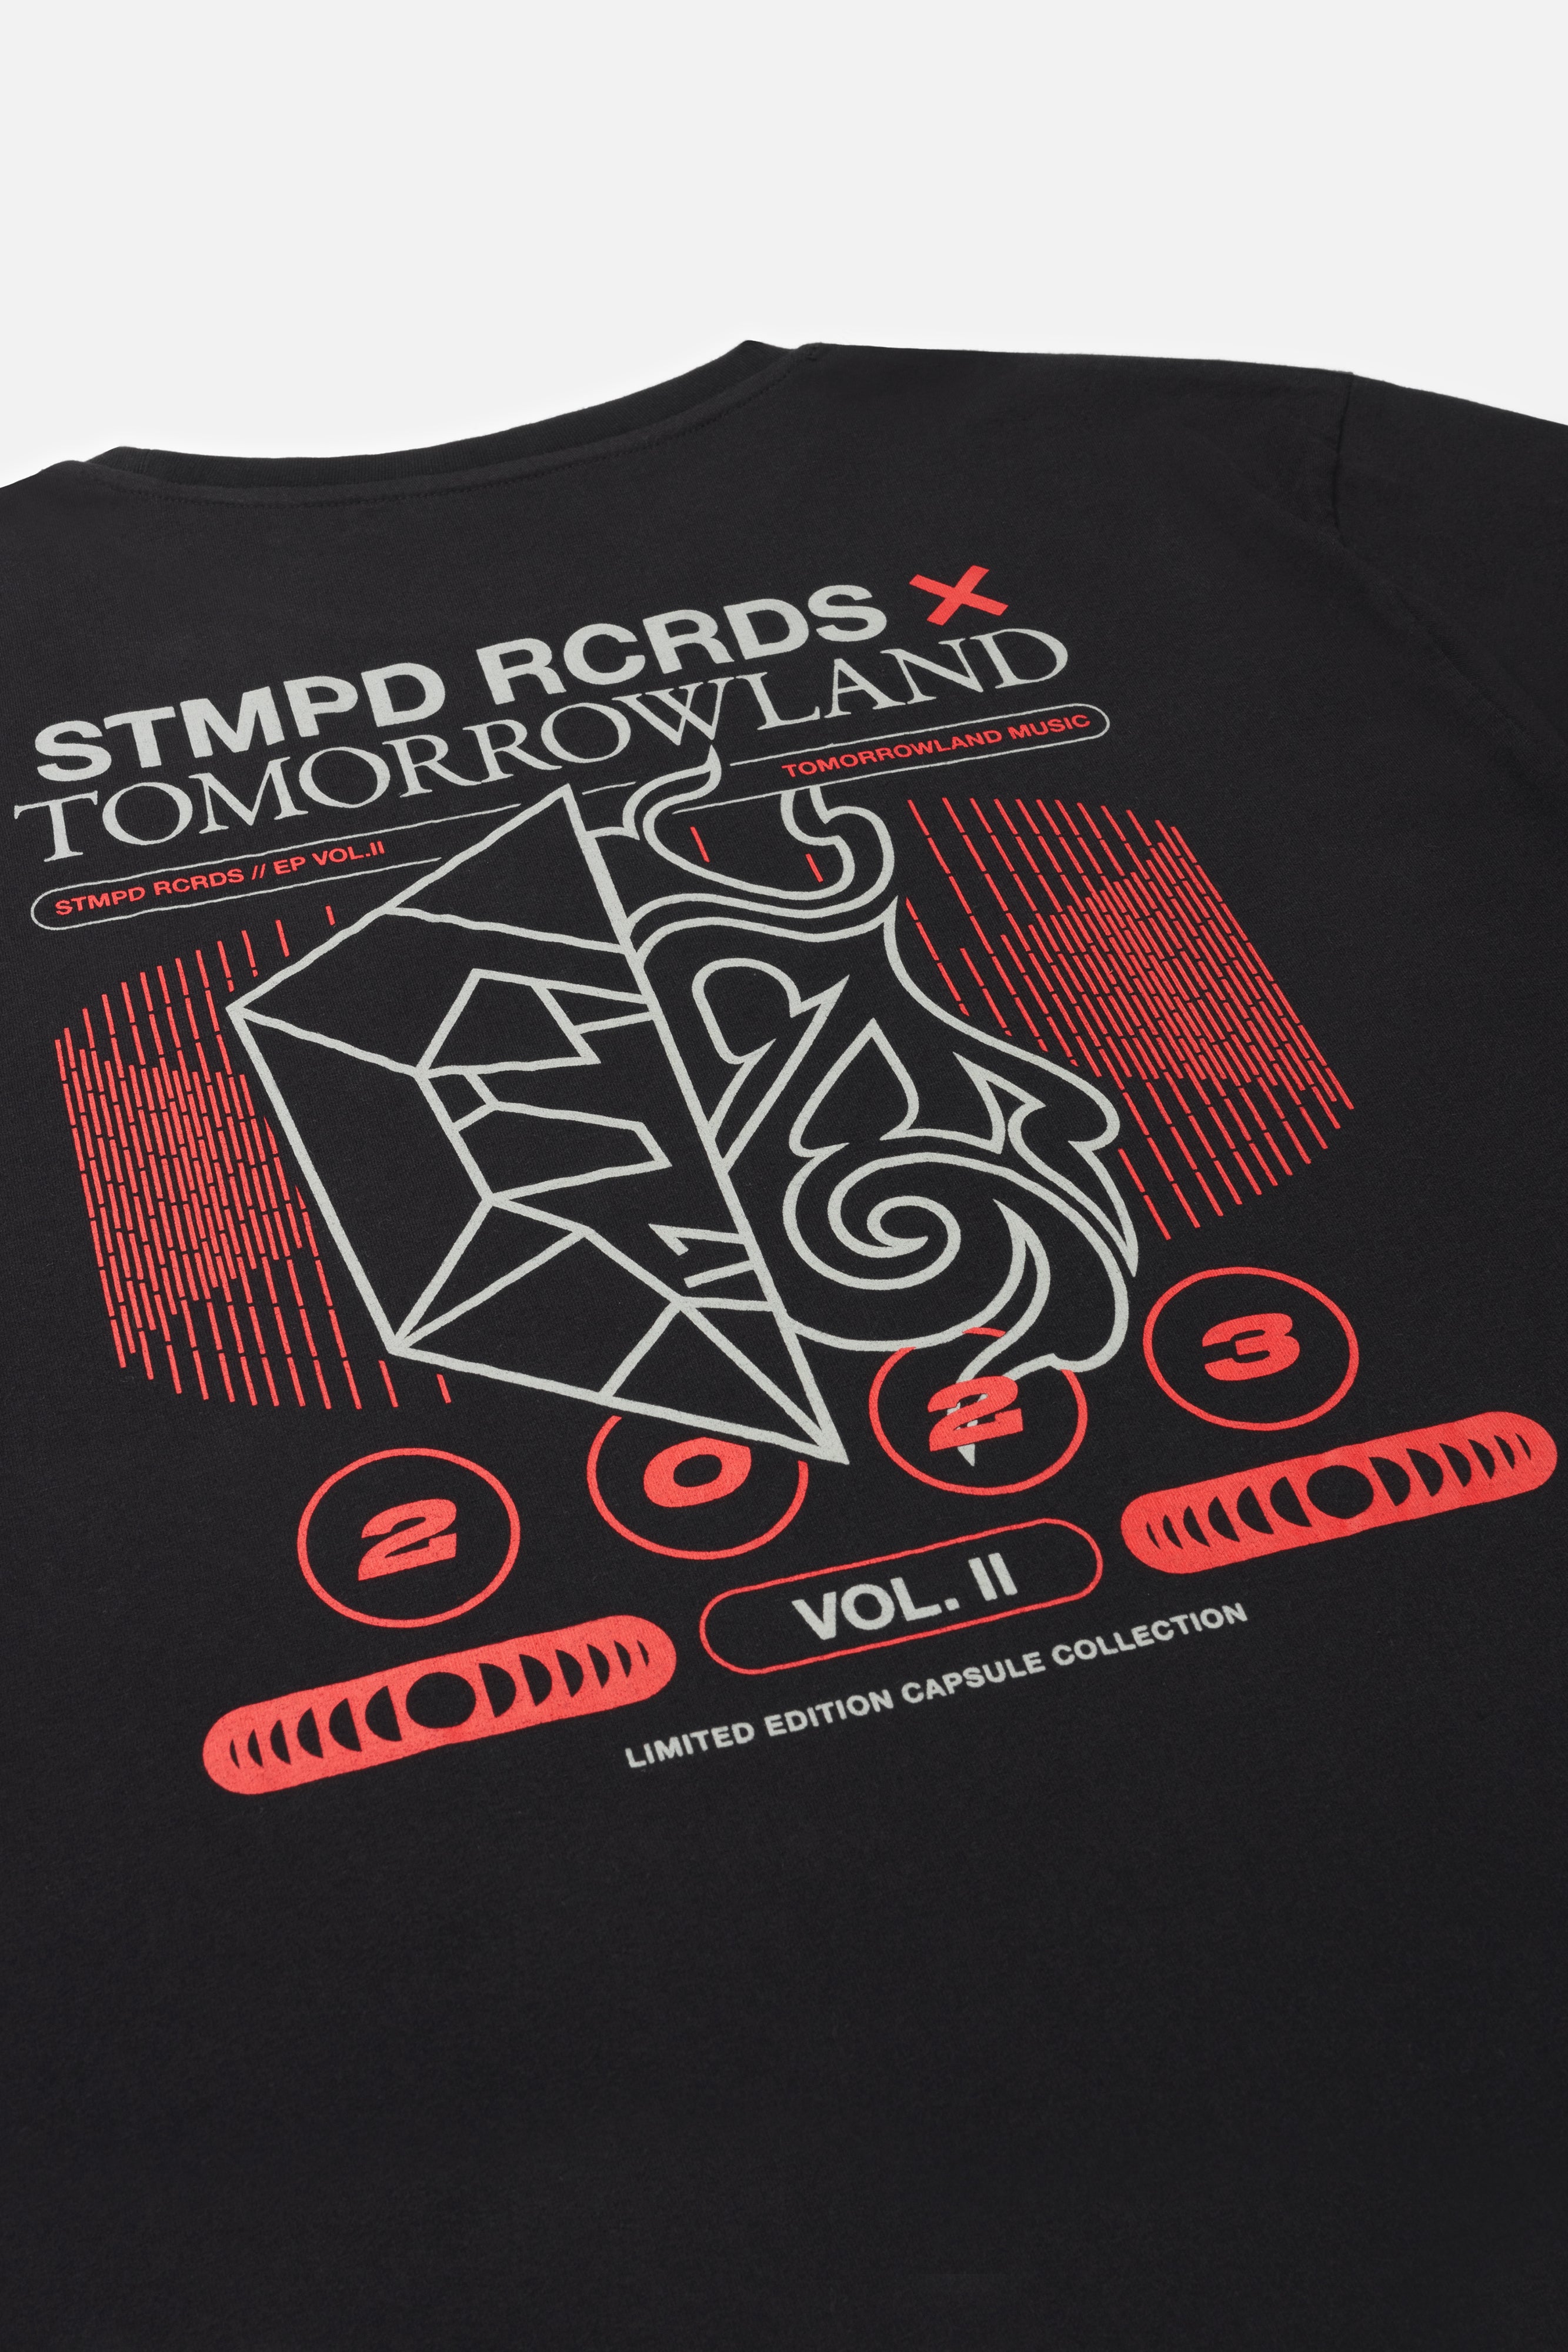 STMPD RCRDS x TOMORROWLAND – Tomorrowland Store